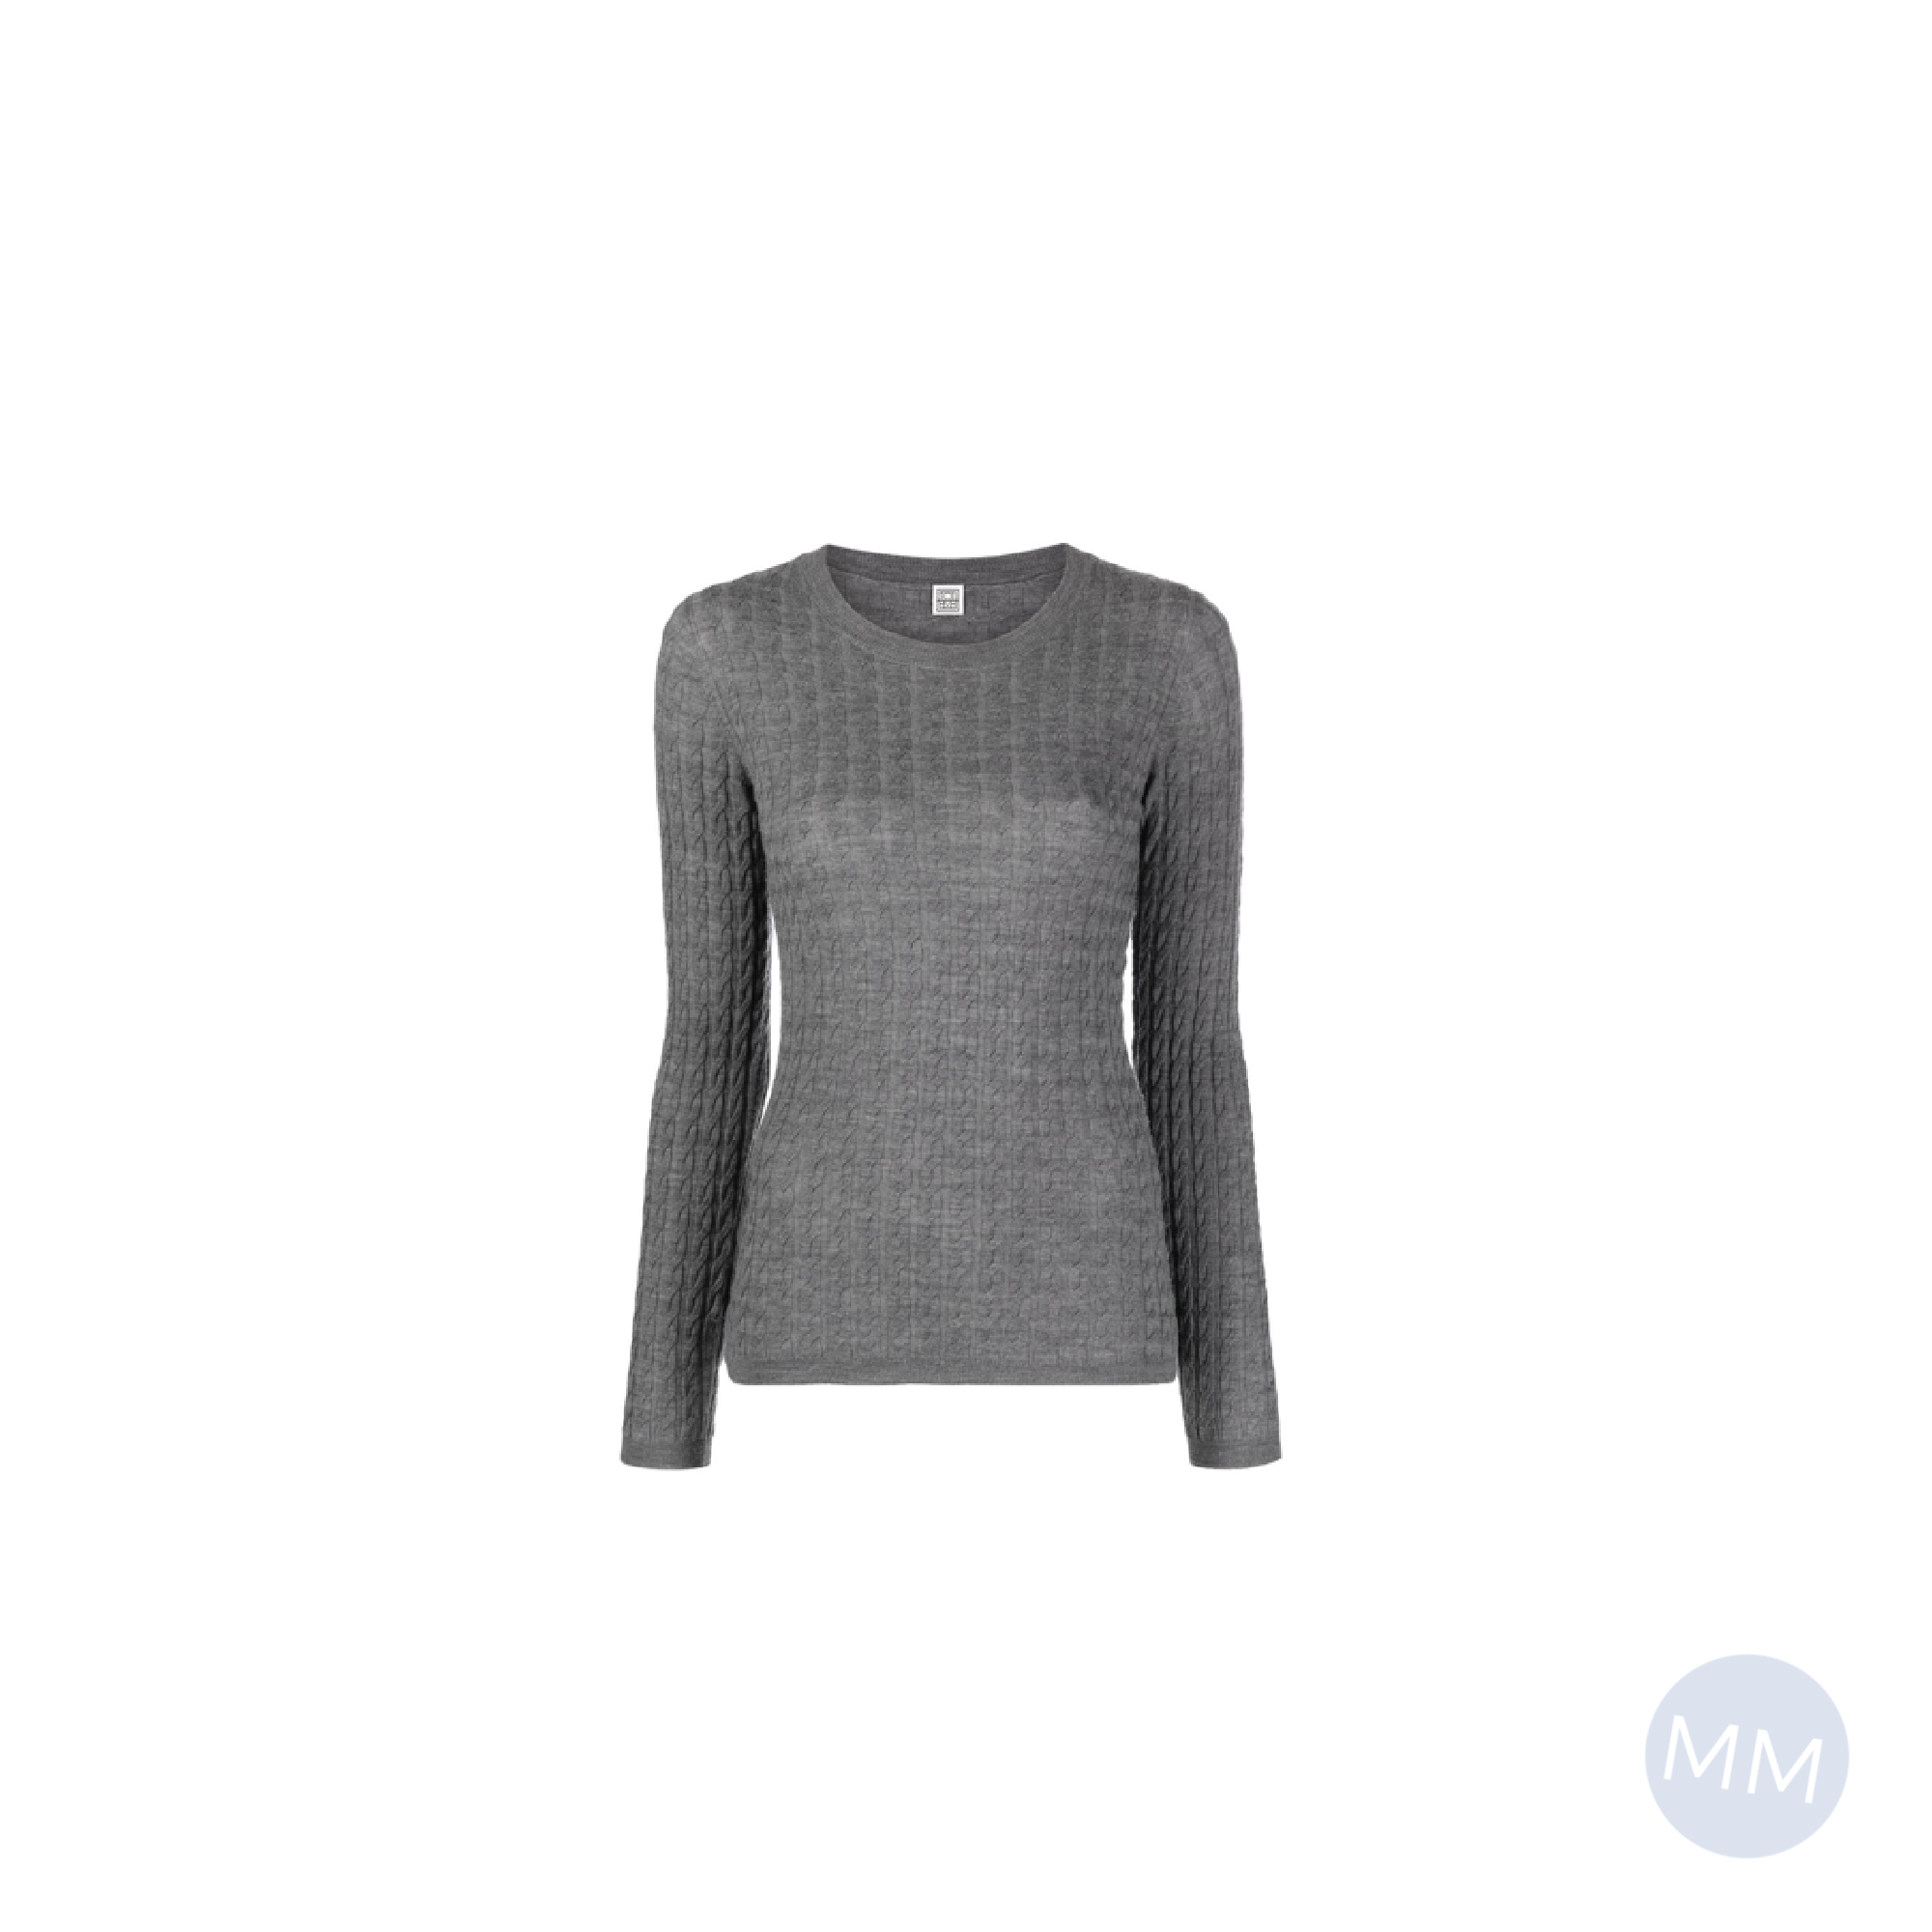 Short-Sleeved Draped Sweater Black Wool Knit